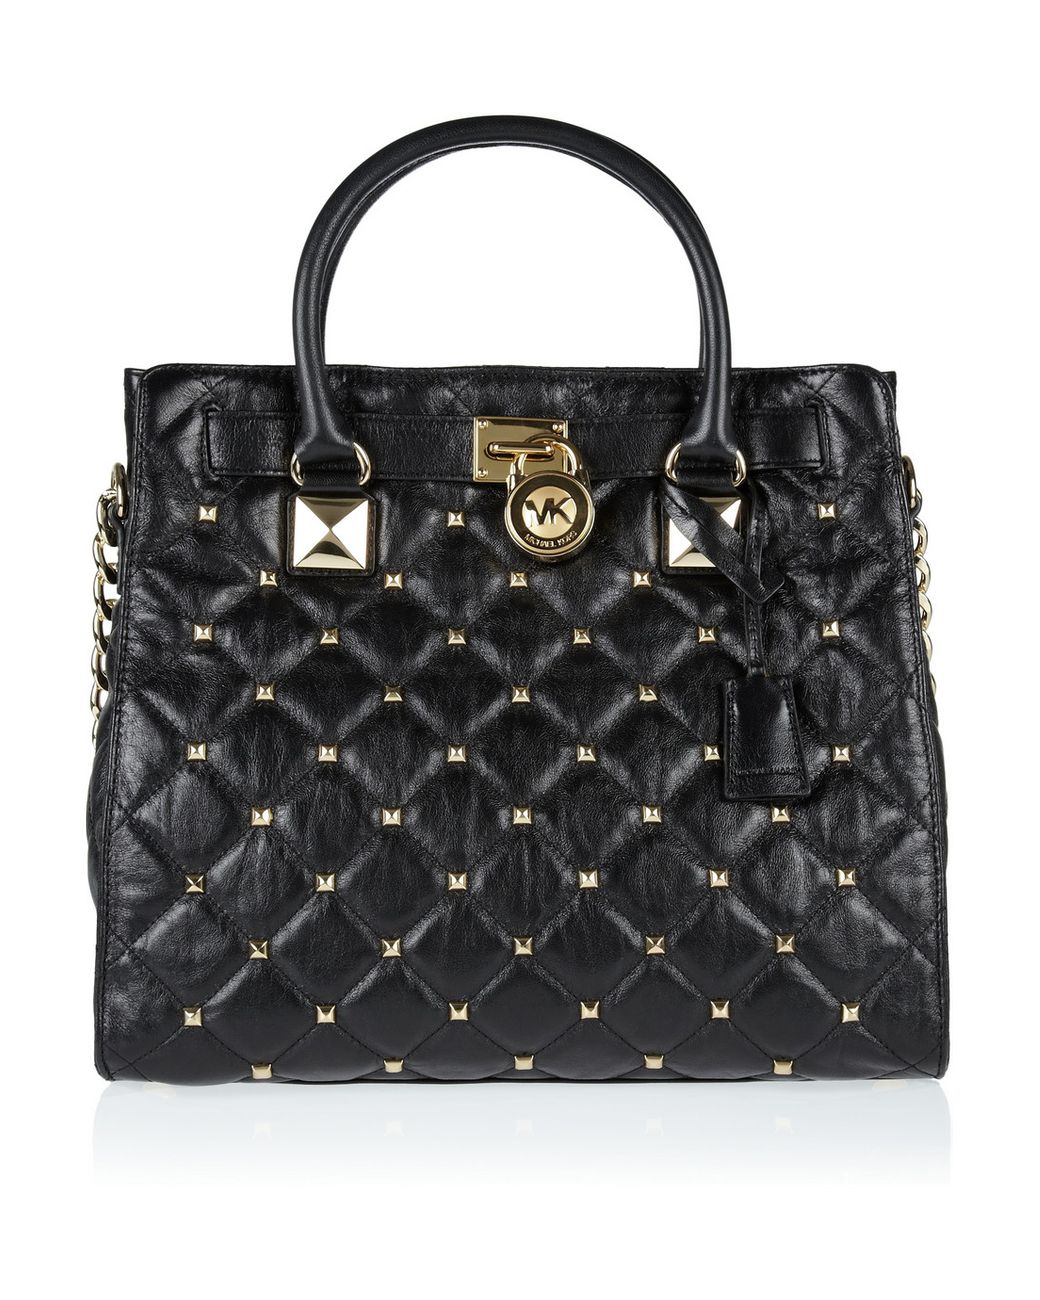 Patent leather handbag Michael Kors Black in Patent leather - 17587831